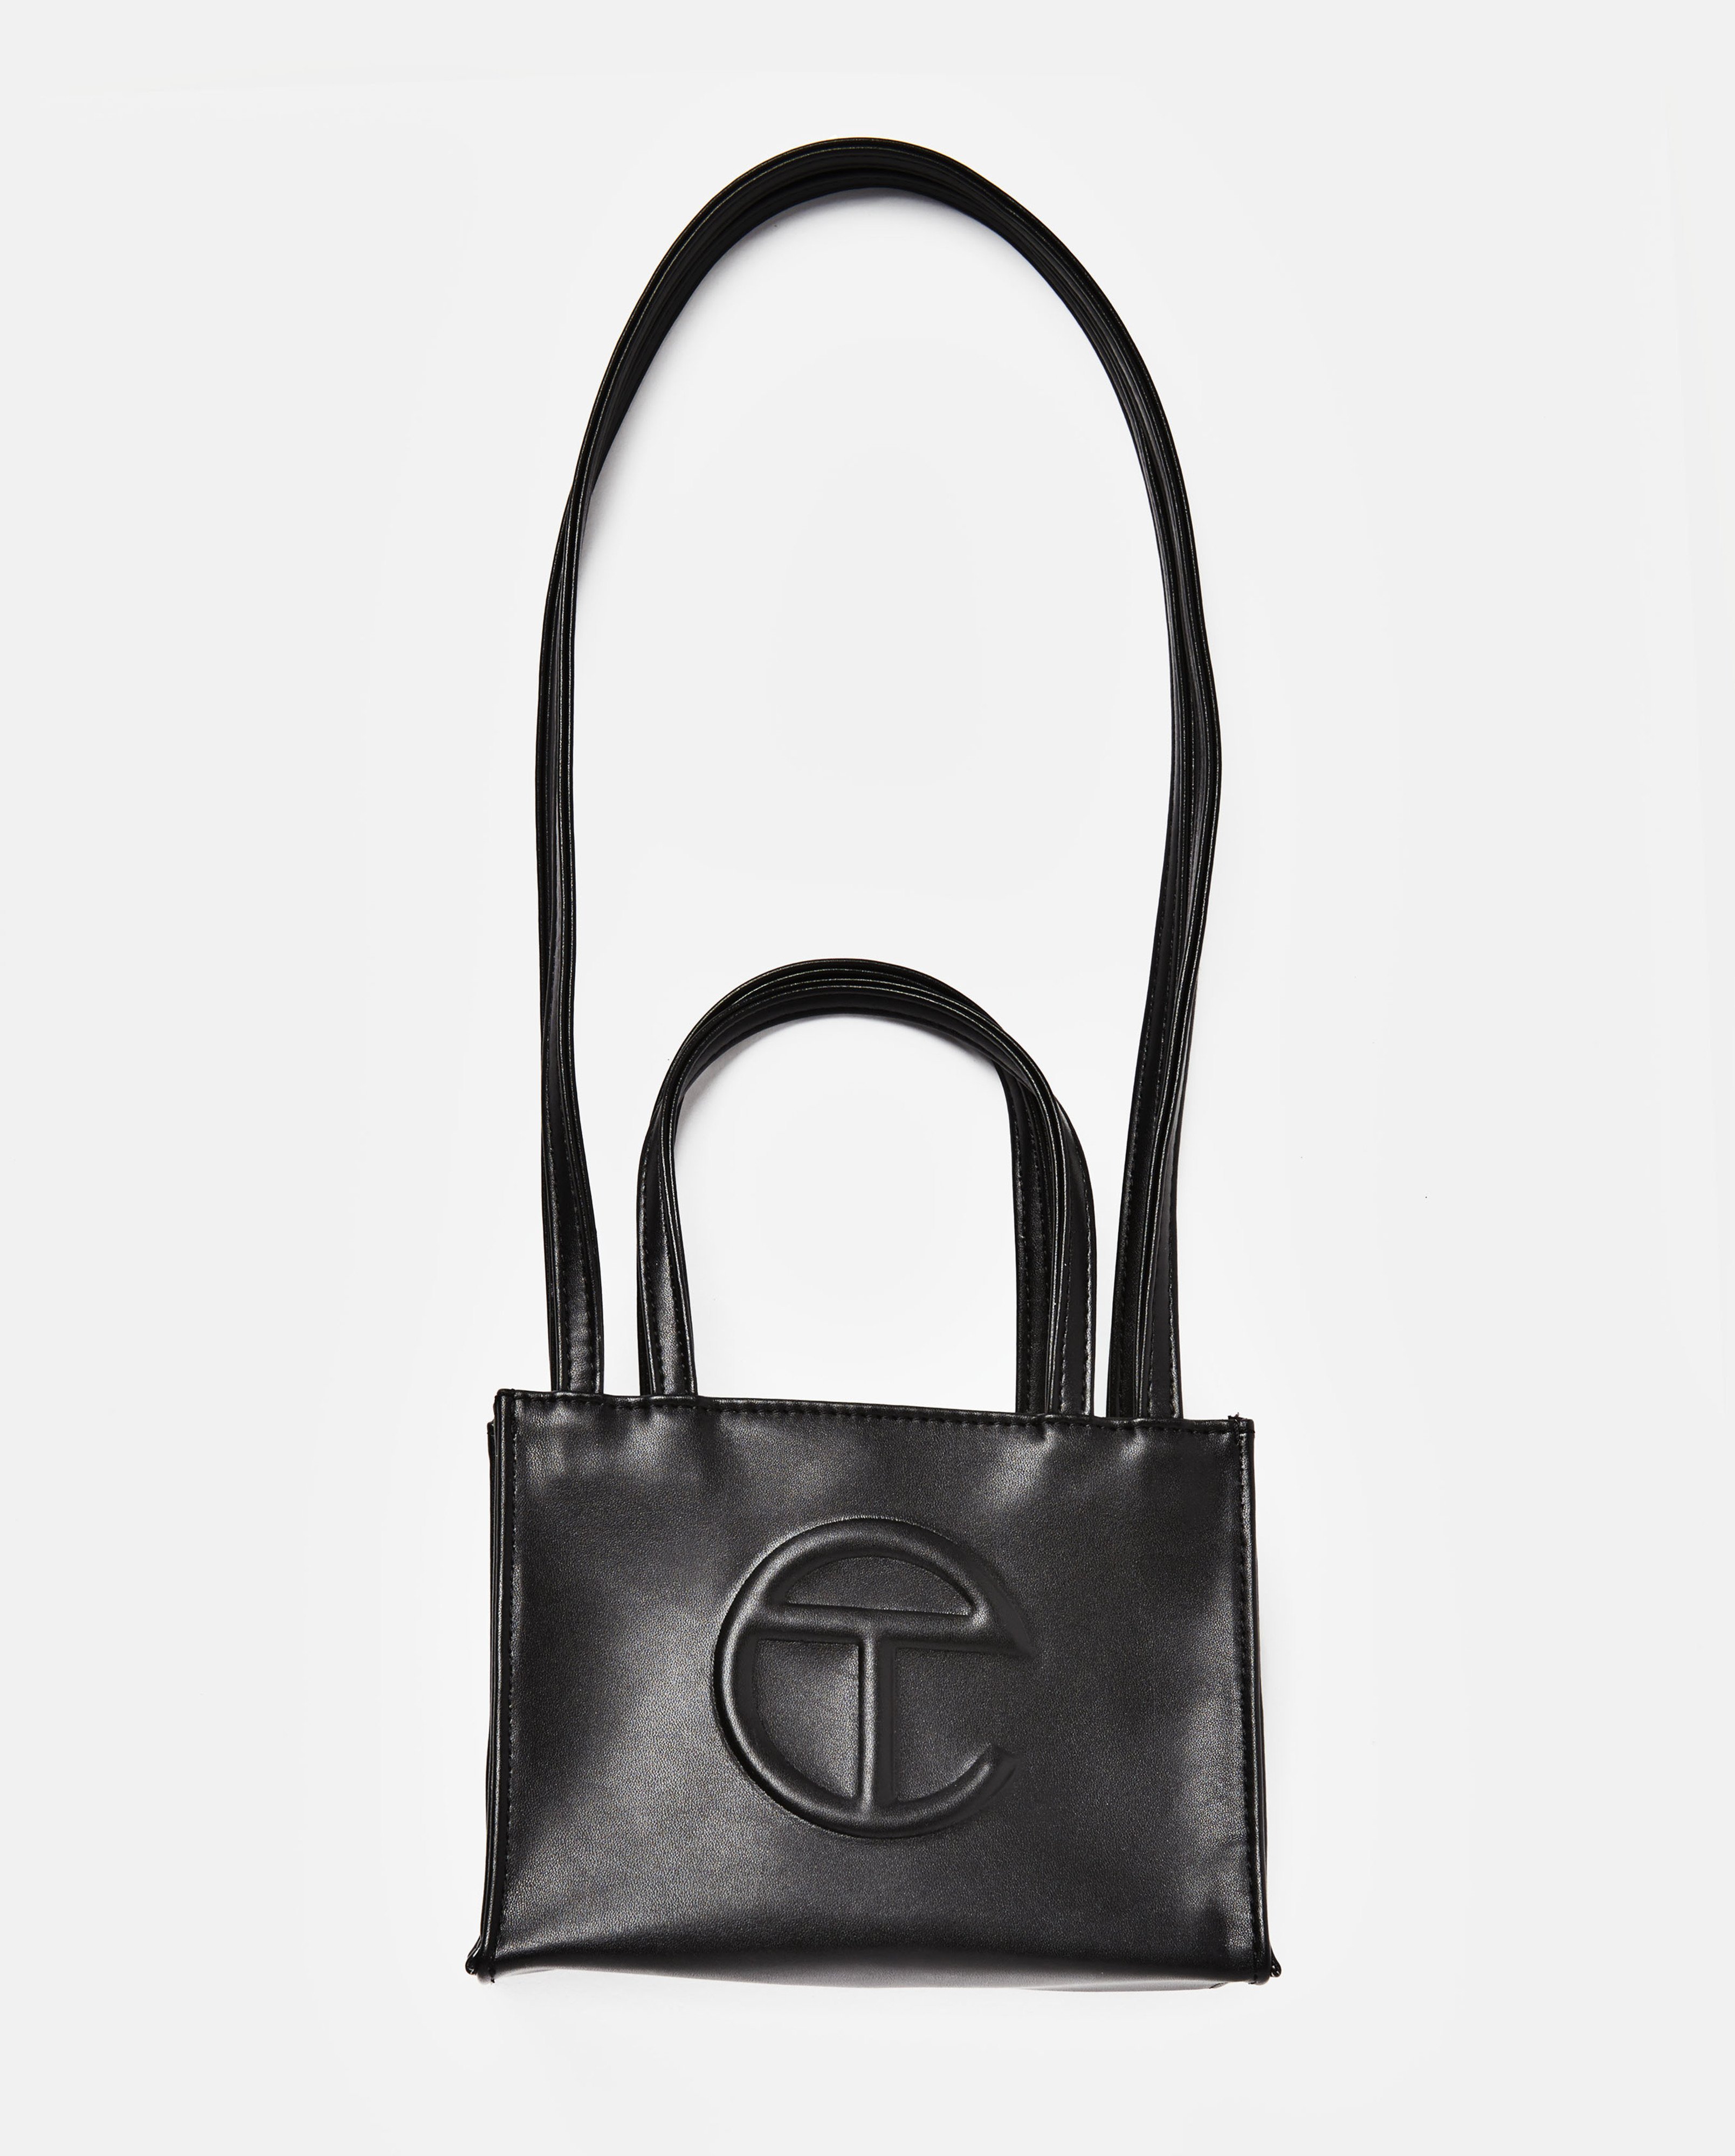 Telfar Leather Small Bag in Black - Lyst